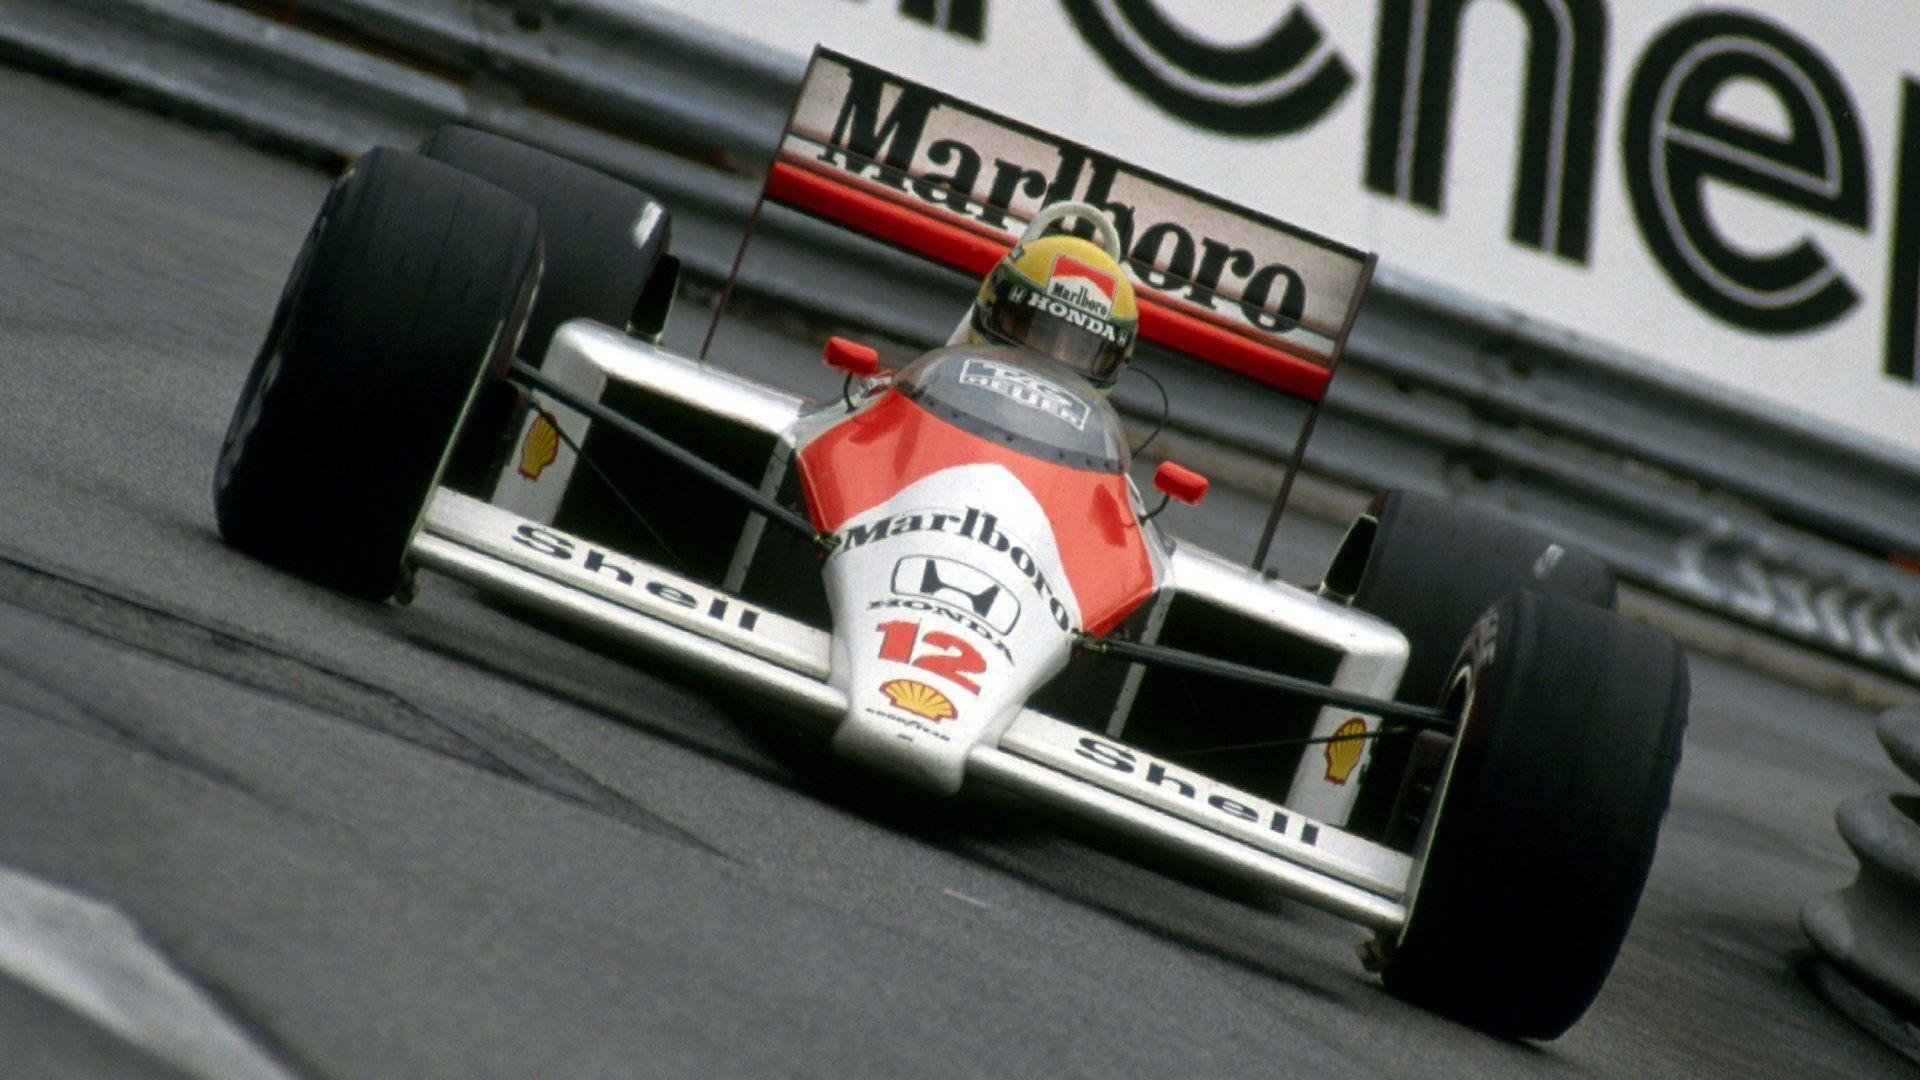 Wallpaper.wiki HD Ayrton Senna Background PIC WPC0010345. Wallpaper